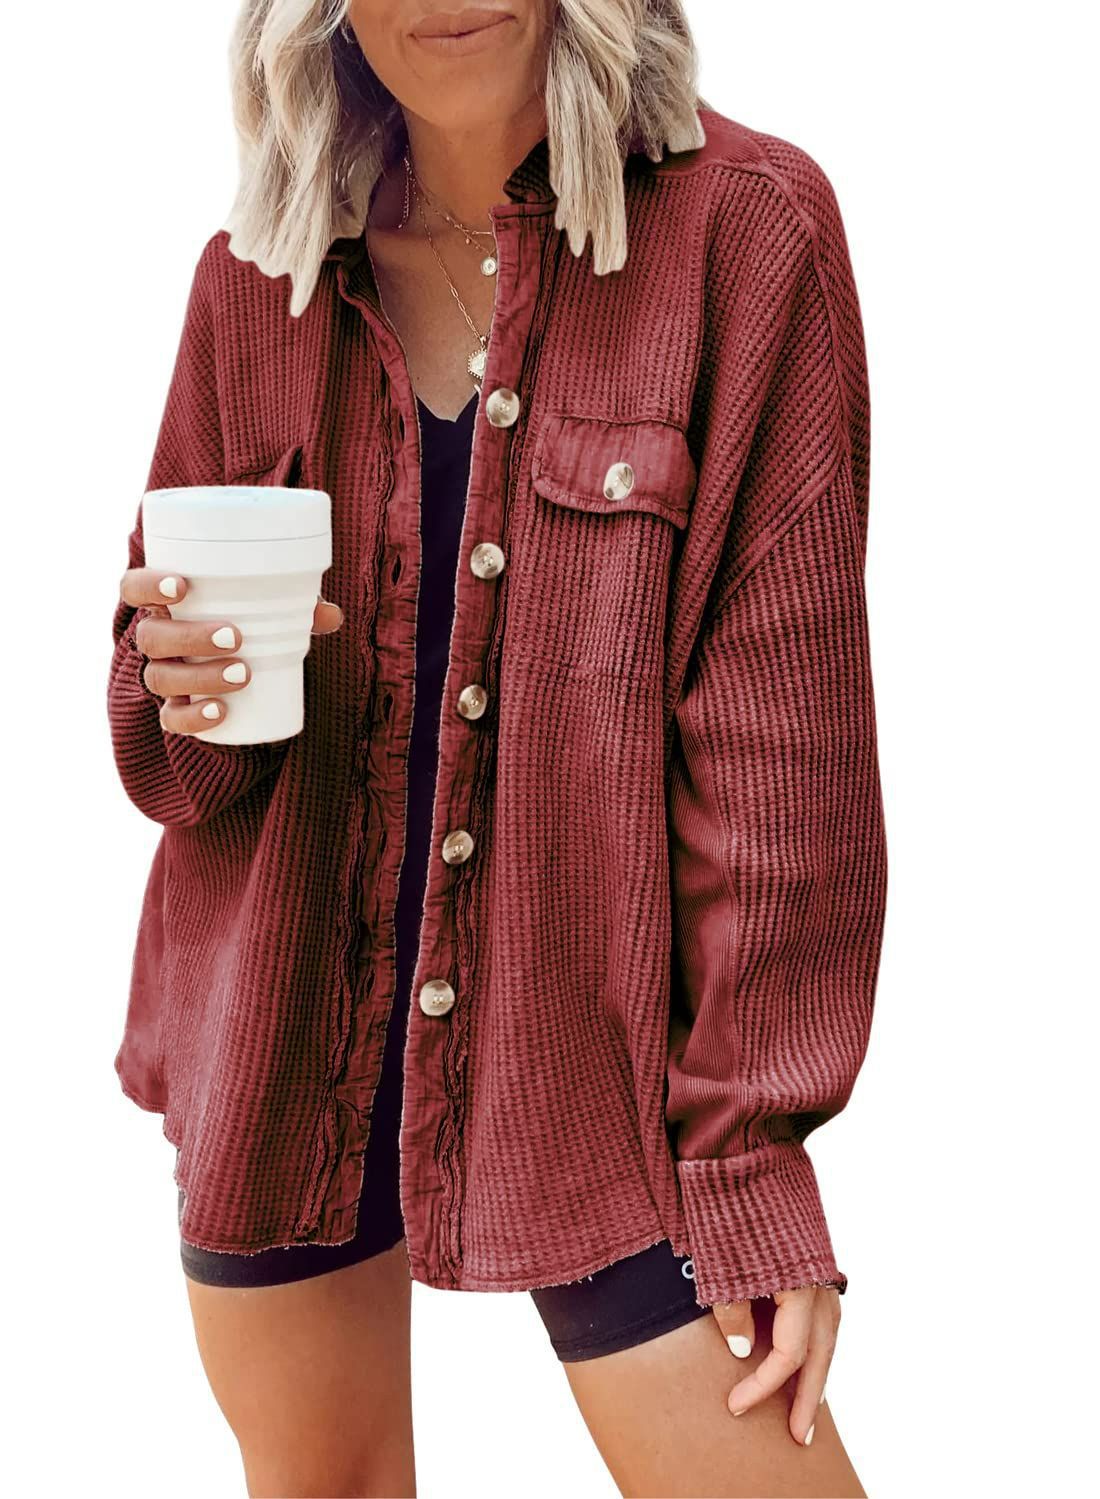 Shirt  | Button Shirt Jacket Women Lapel Long Sleeve Blouse Fashion Jacket Tops | WIne Red |  L| thecurvestory.myshopify.com